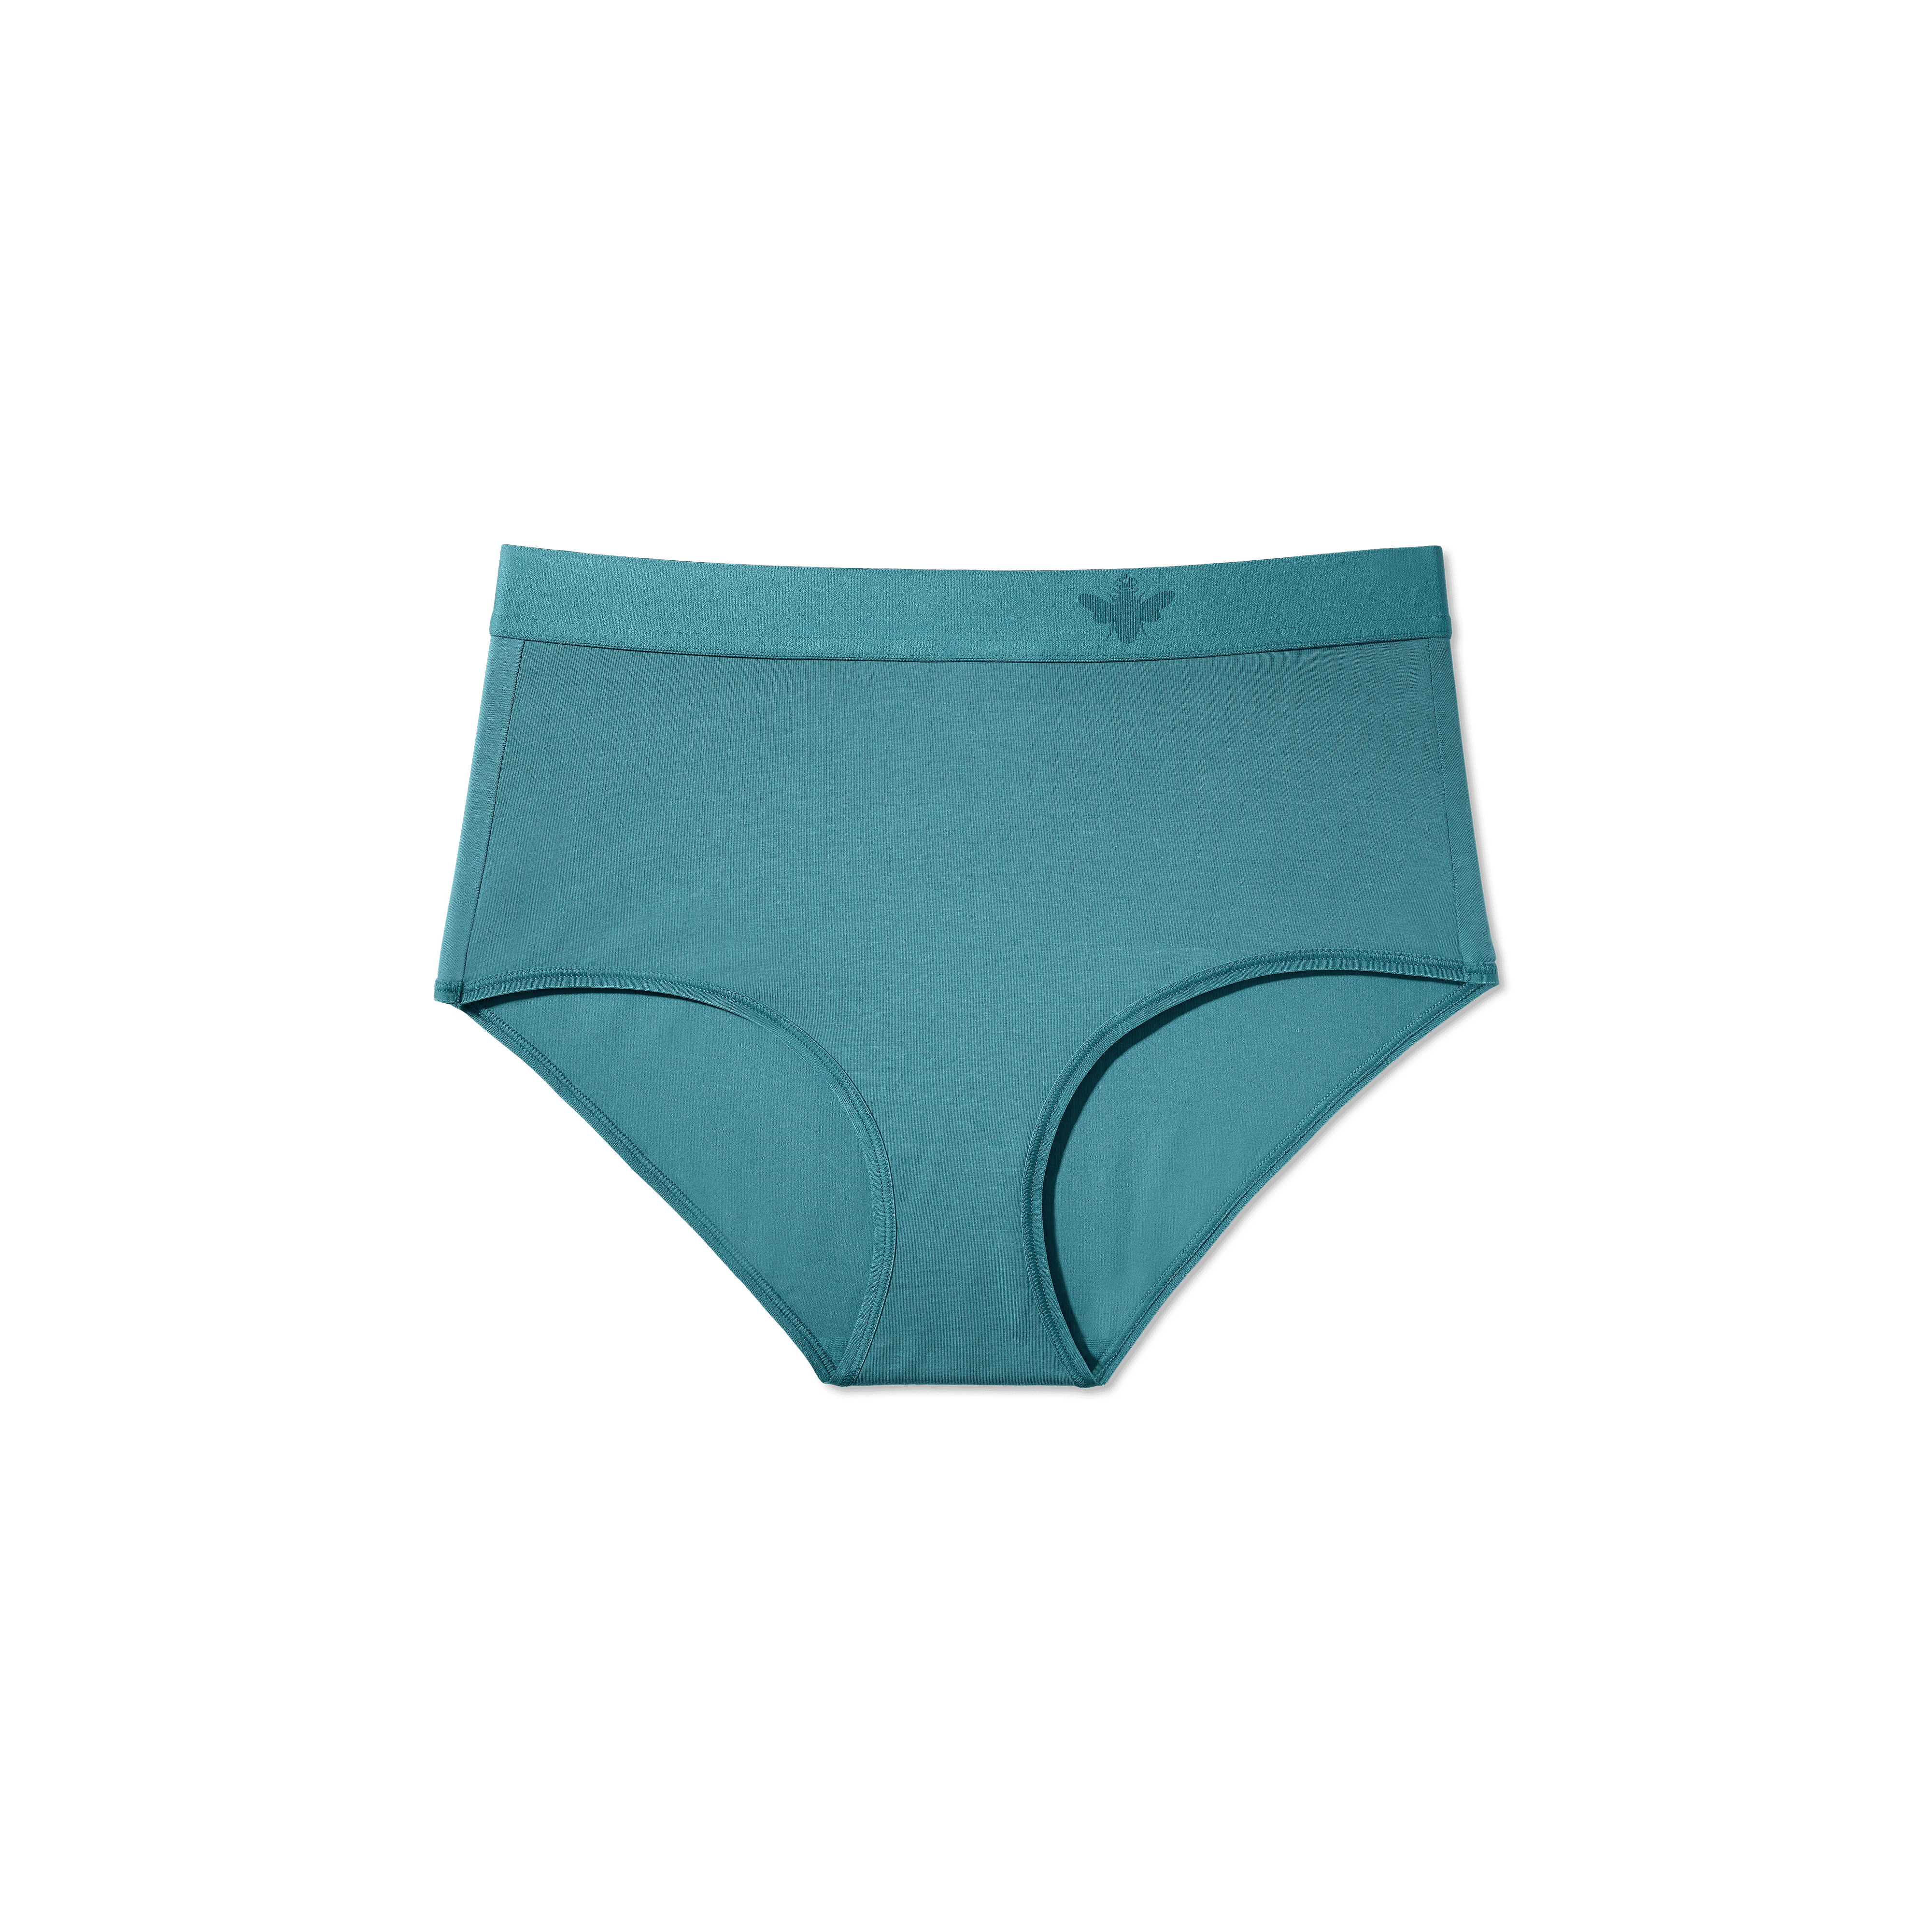 Bombas Women's Ribbed Seamless Hipster - Plus Size Underwear - Vintage Blue  - 2X - Modal Nylon - ShopStyle Panties